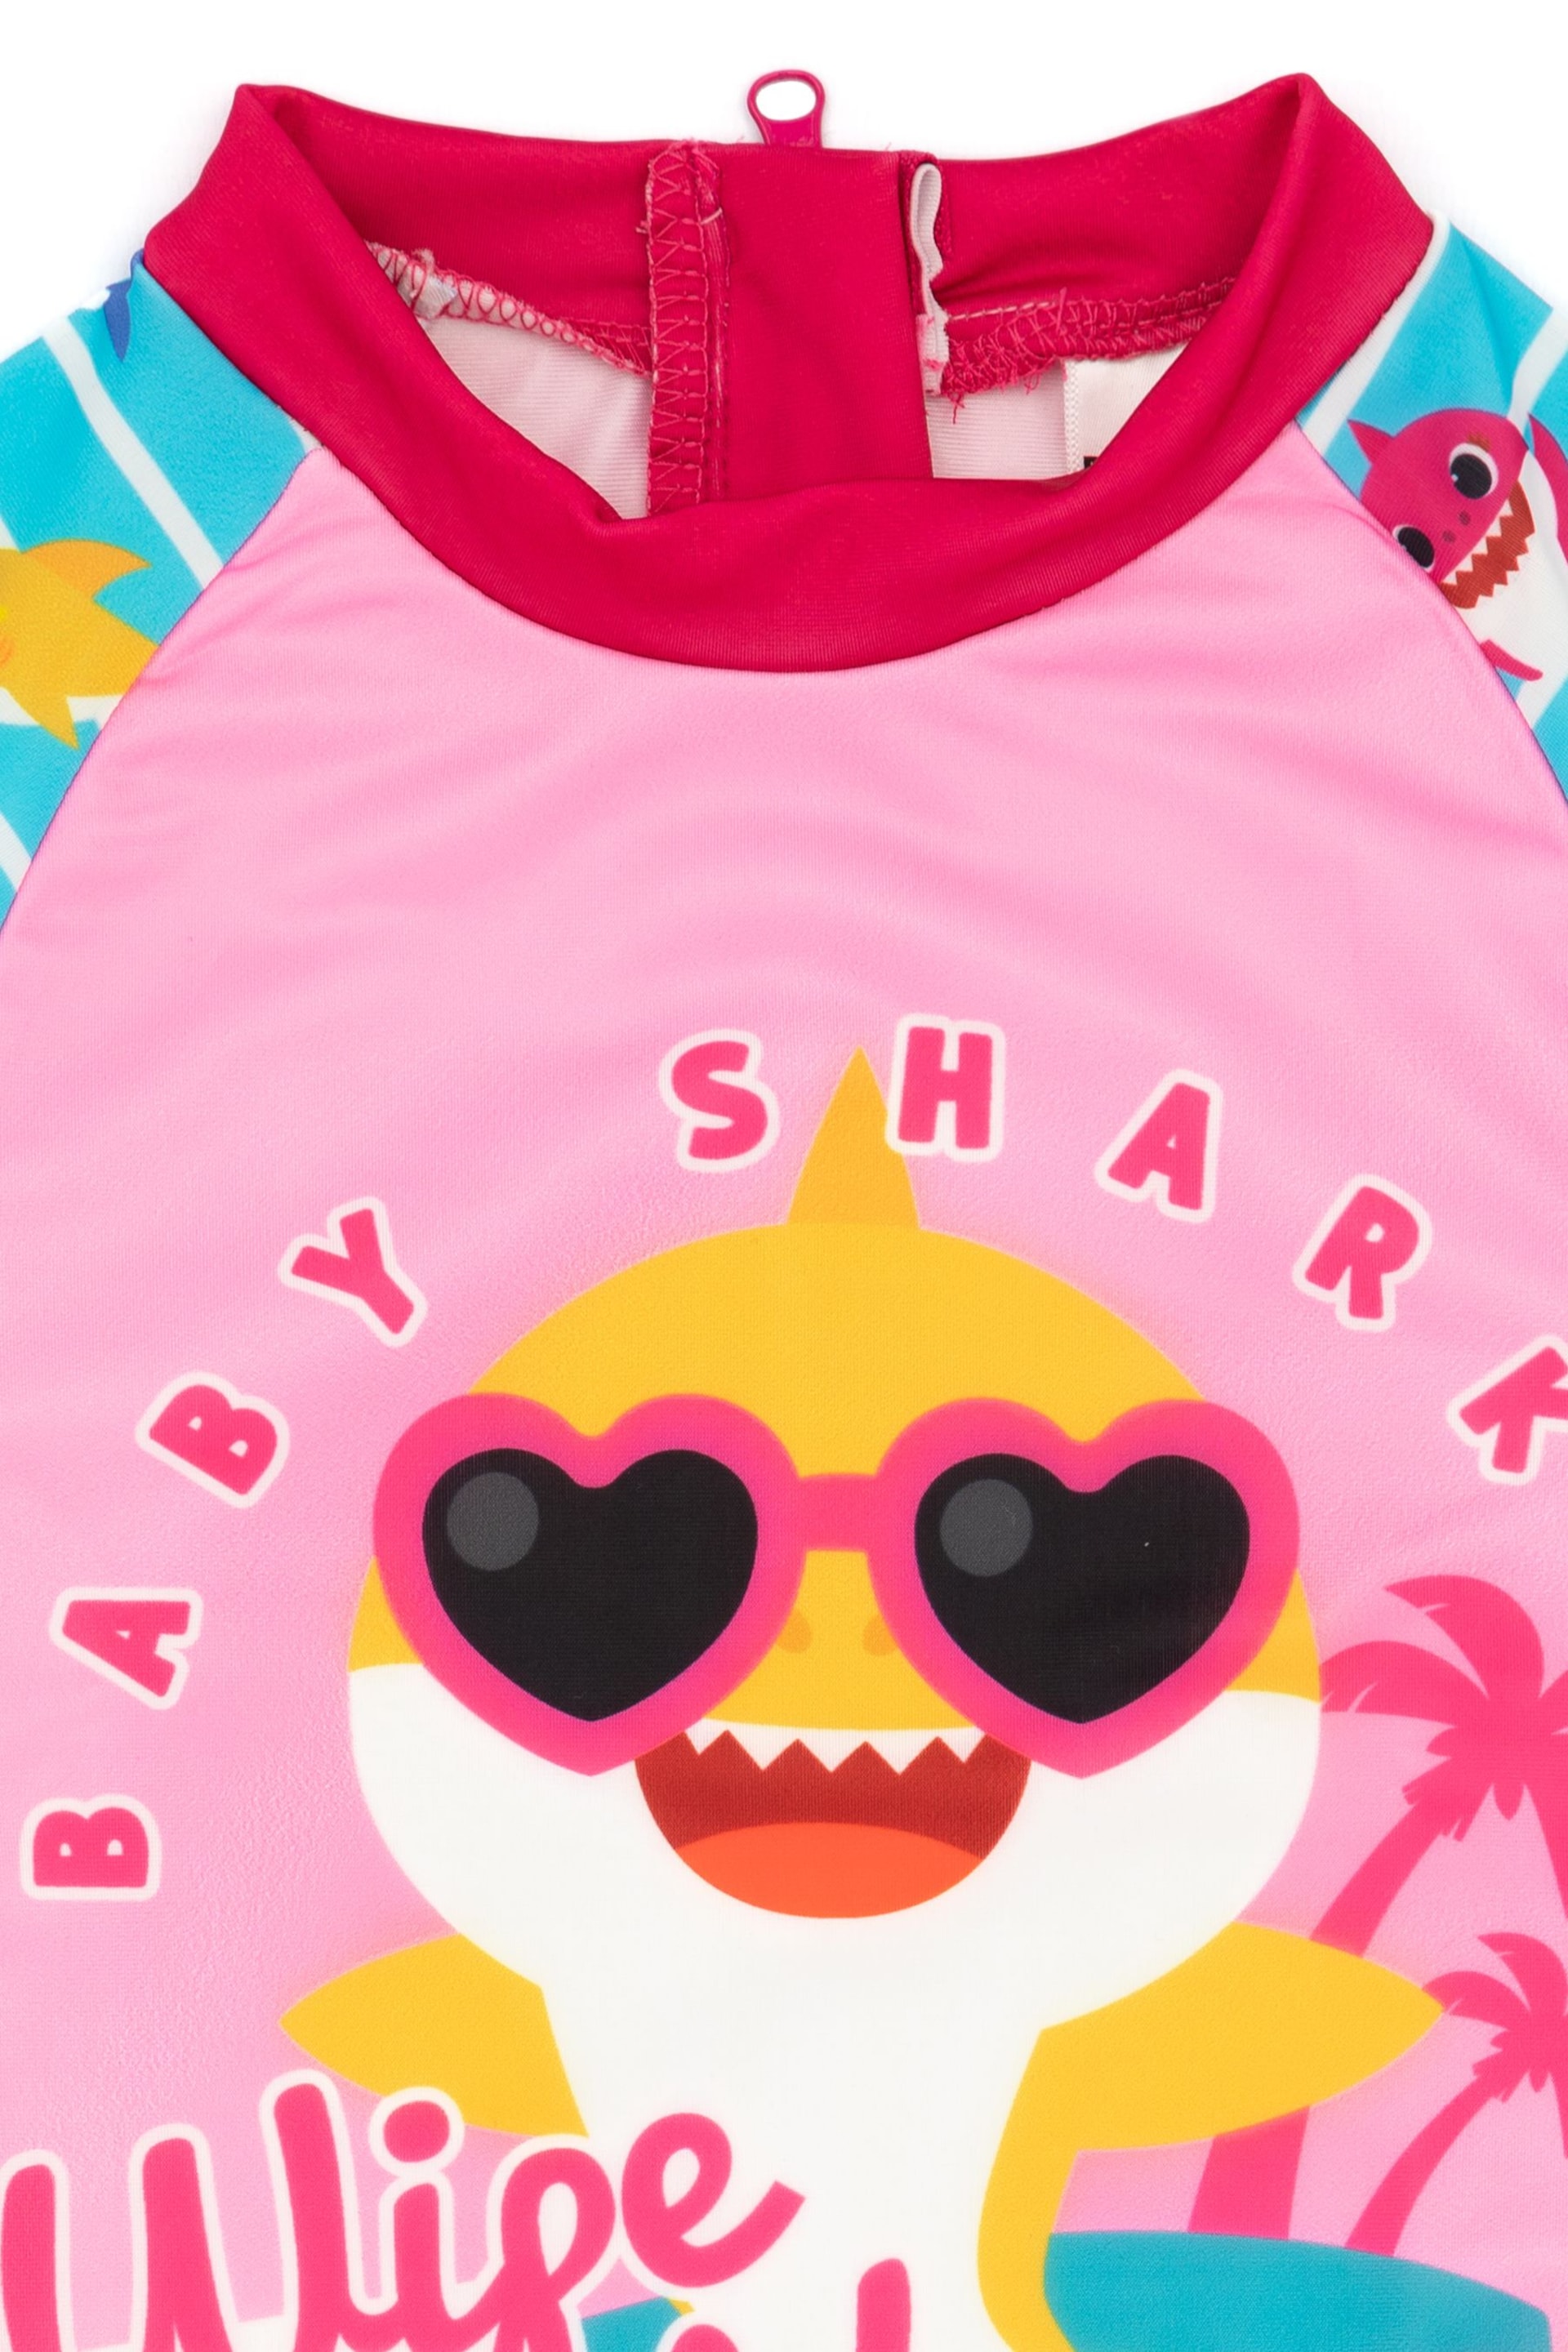 Vanilla Underground Pink Girls Baby Shark Swimsuit - Image 3 of 5